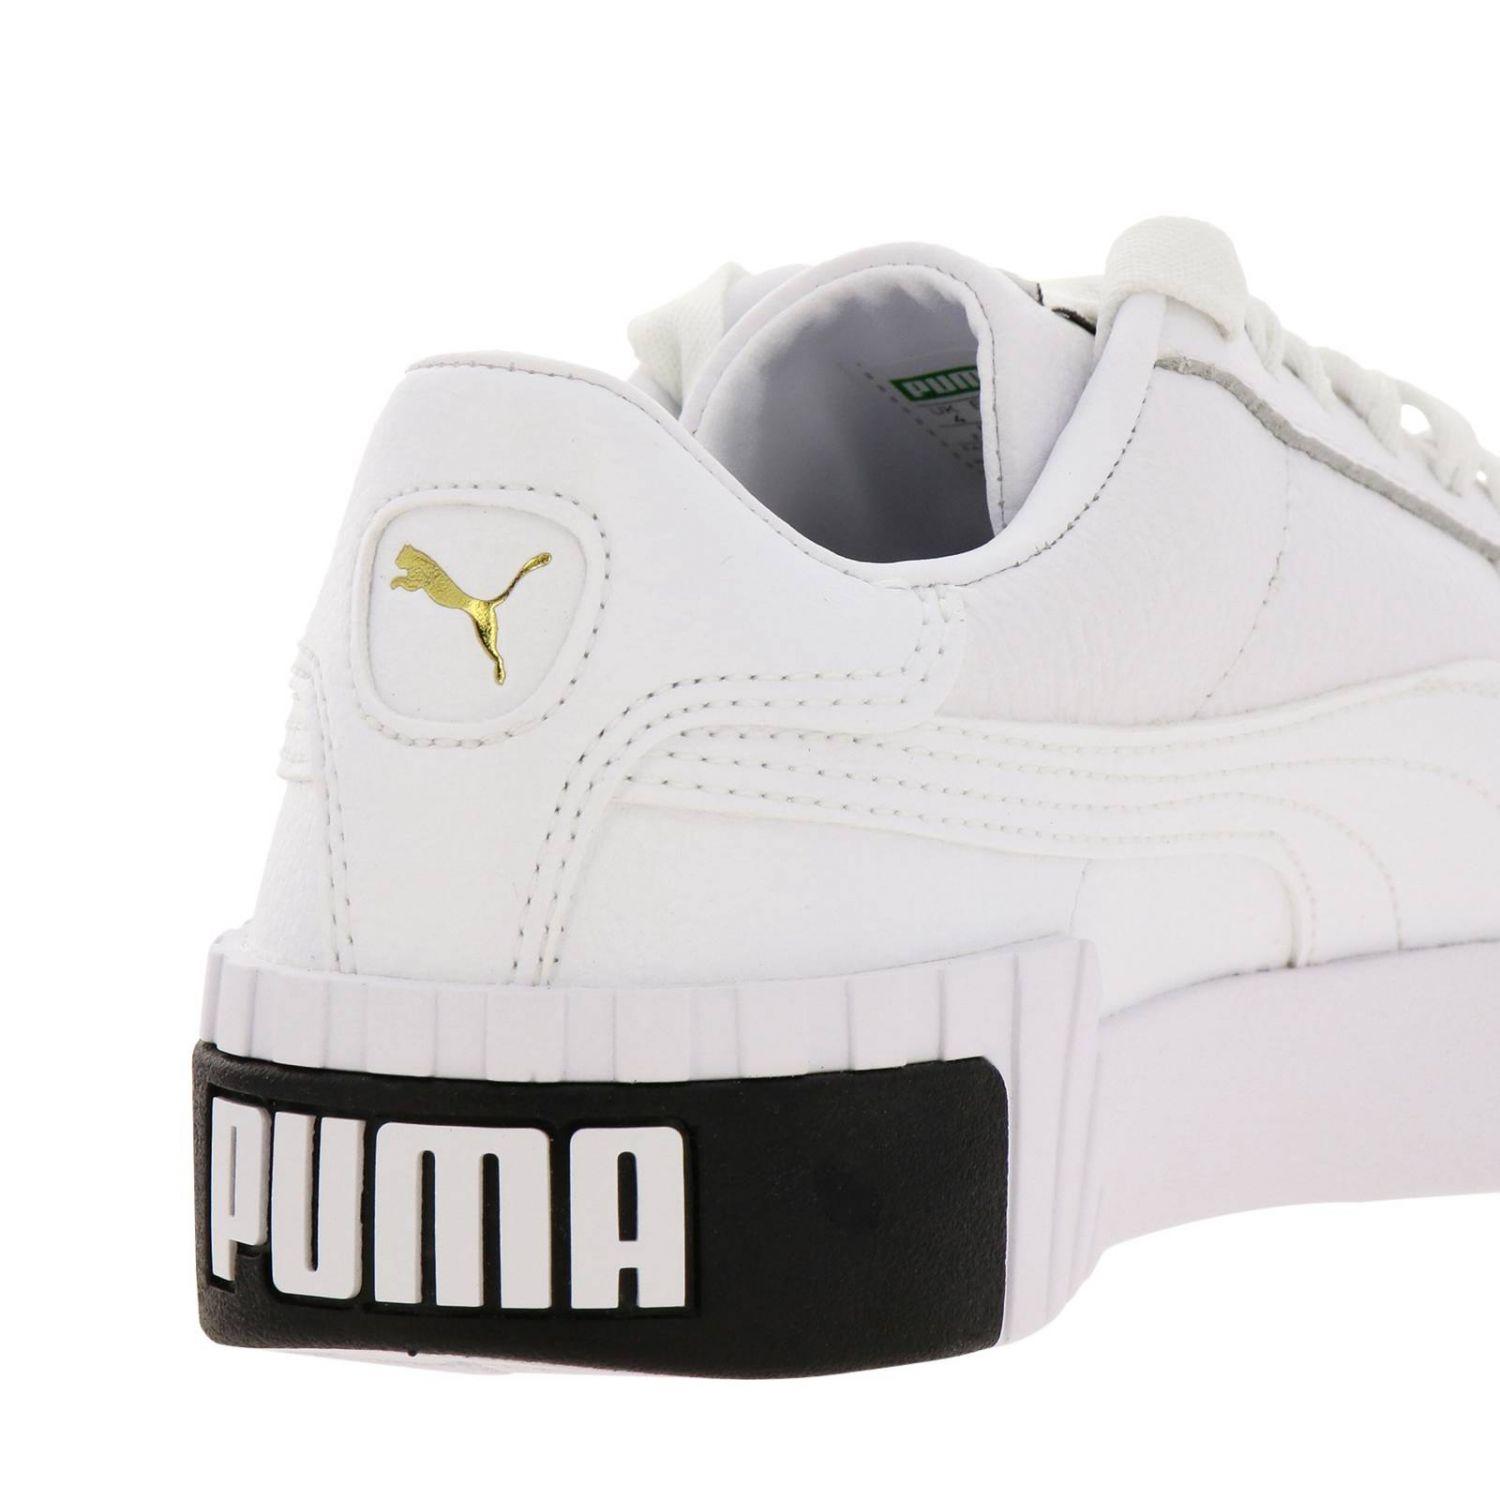 puma white leather shoes womens